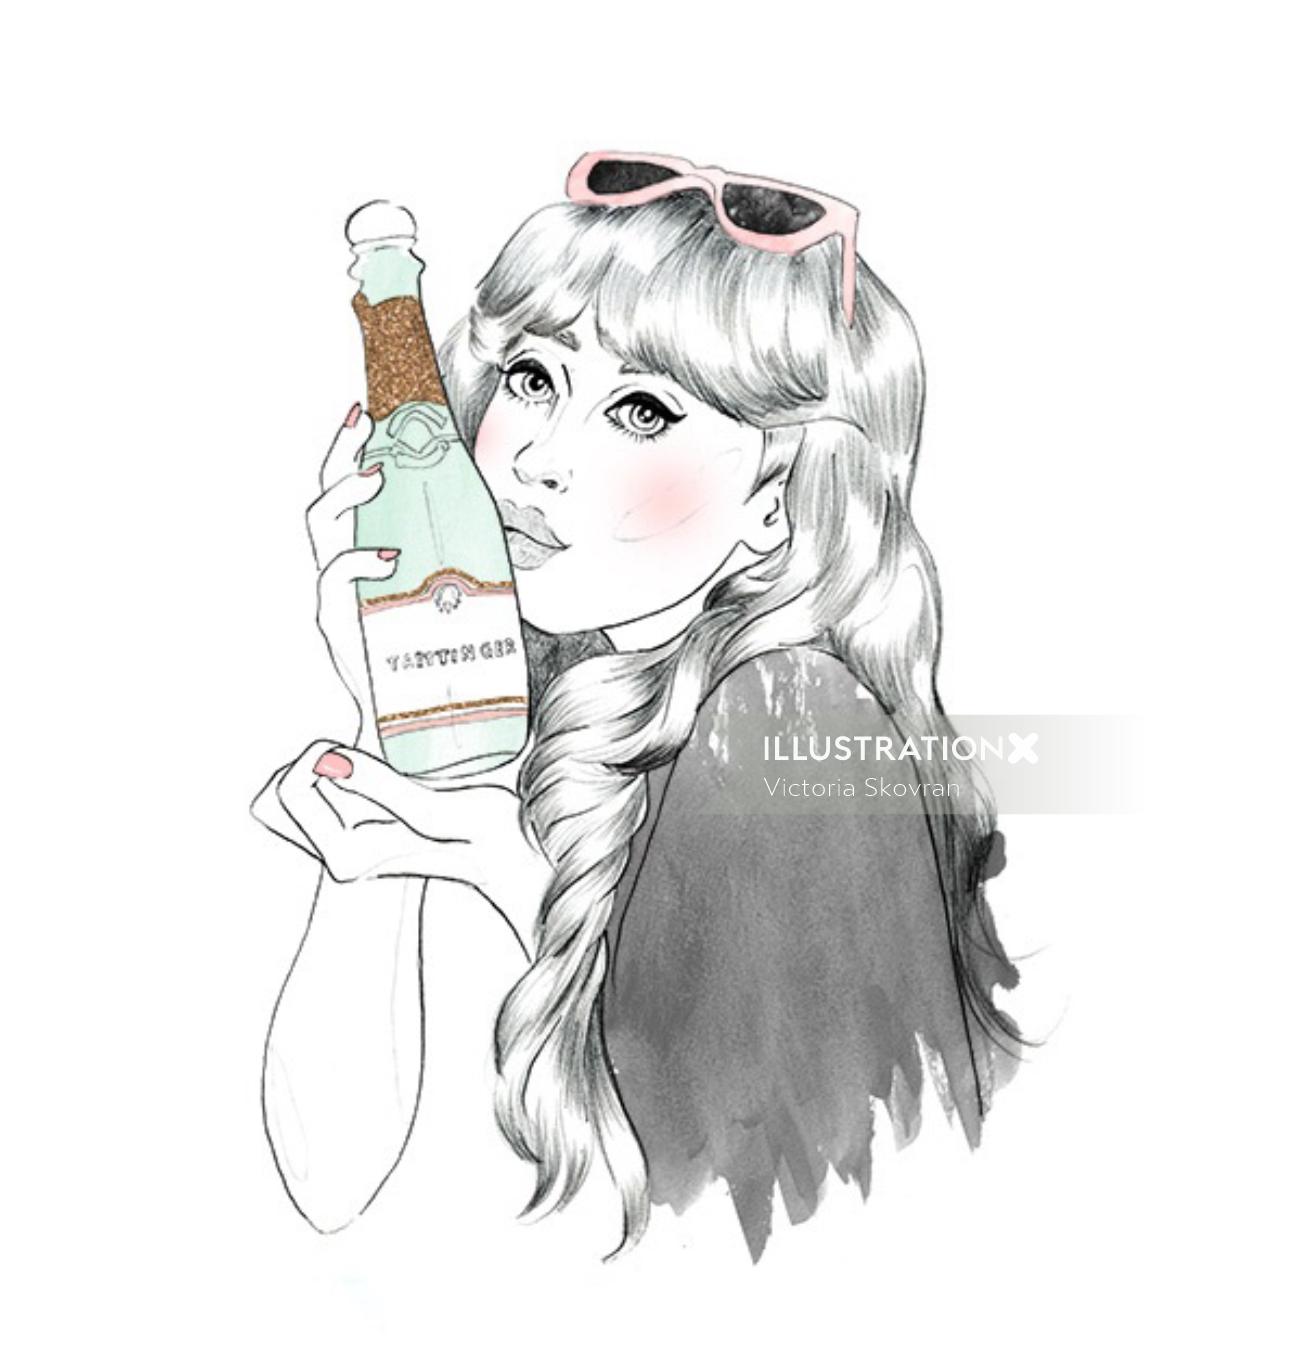 Illustration of a lady holding a bottle